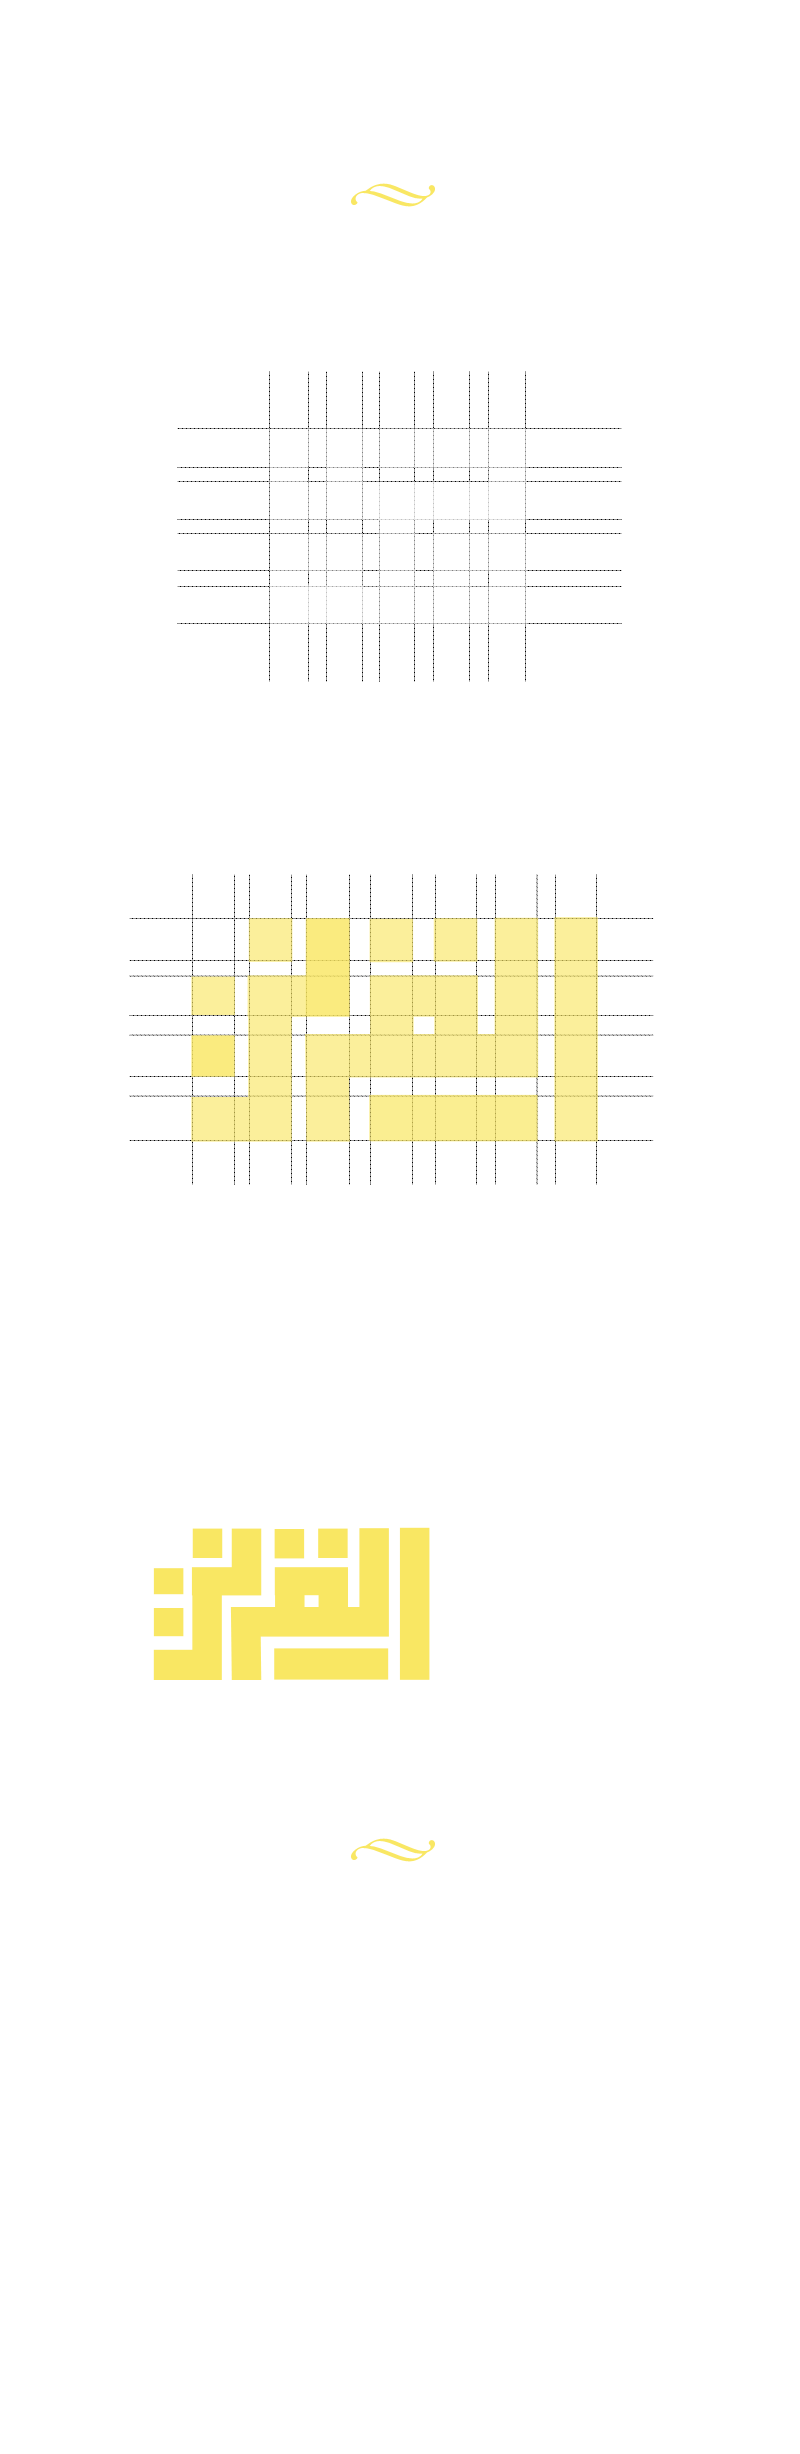 designe Arab font typographic new